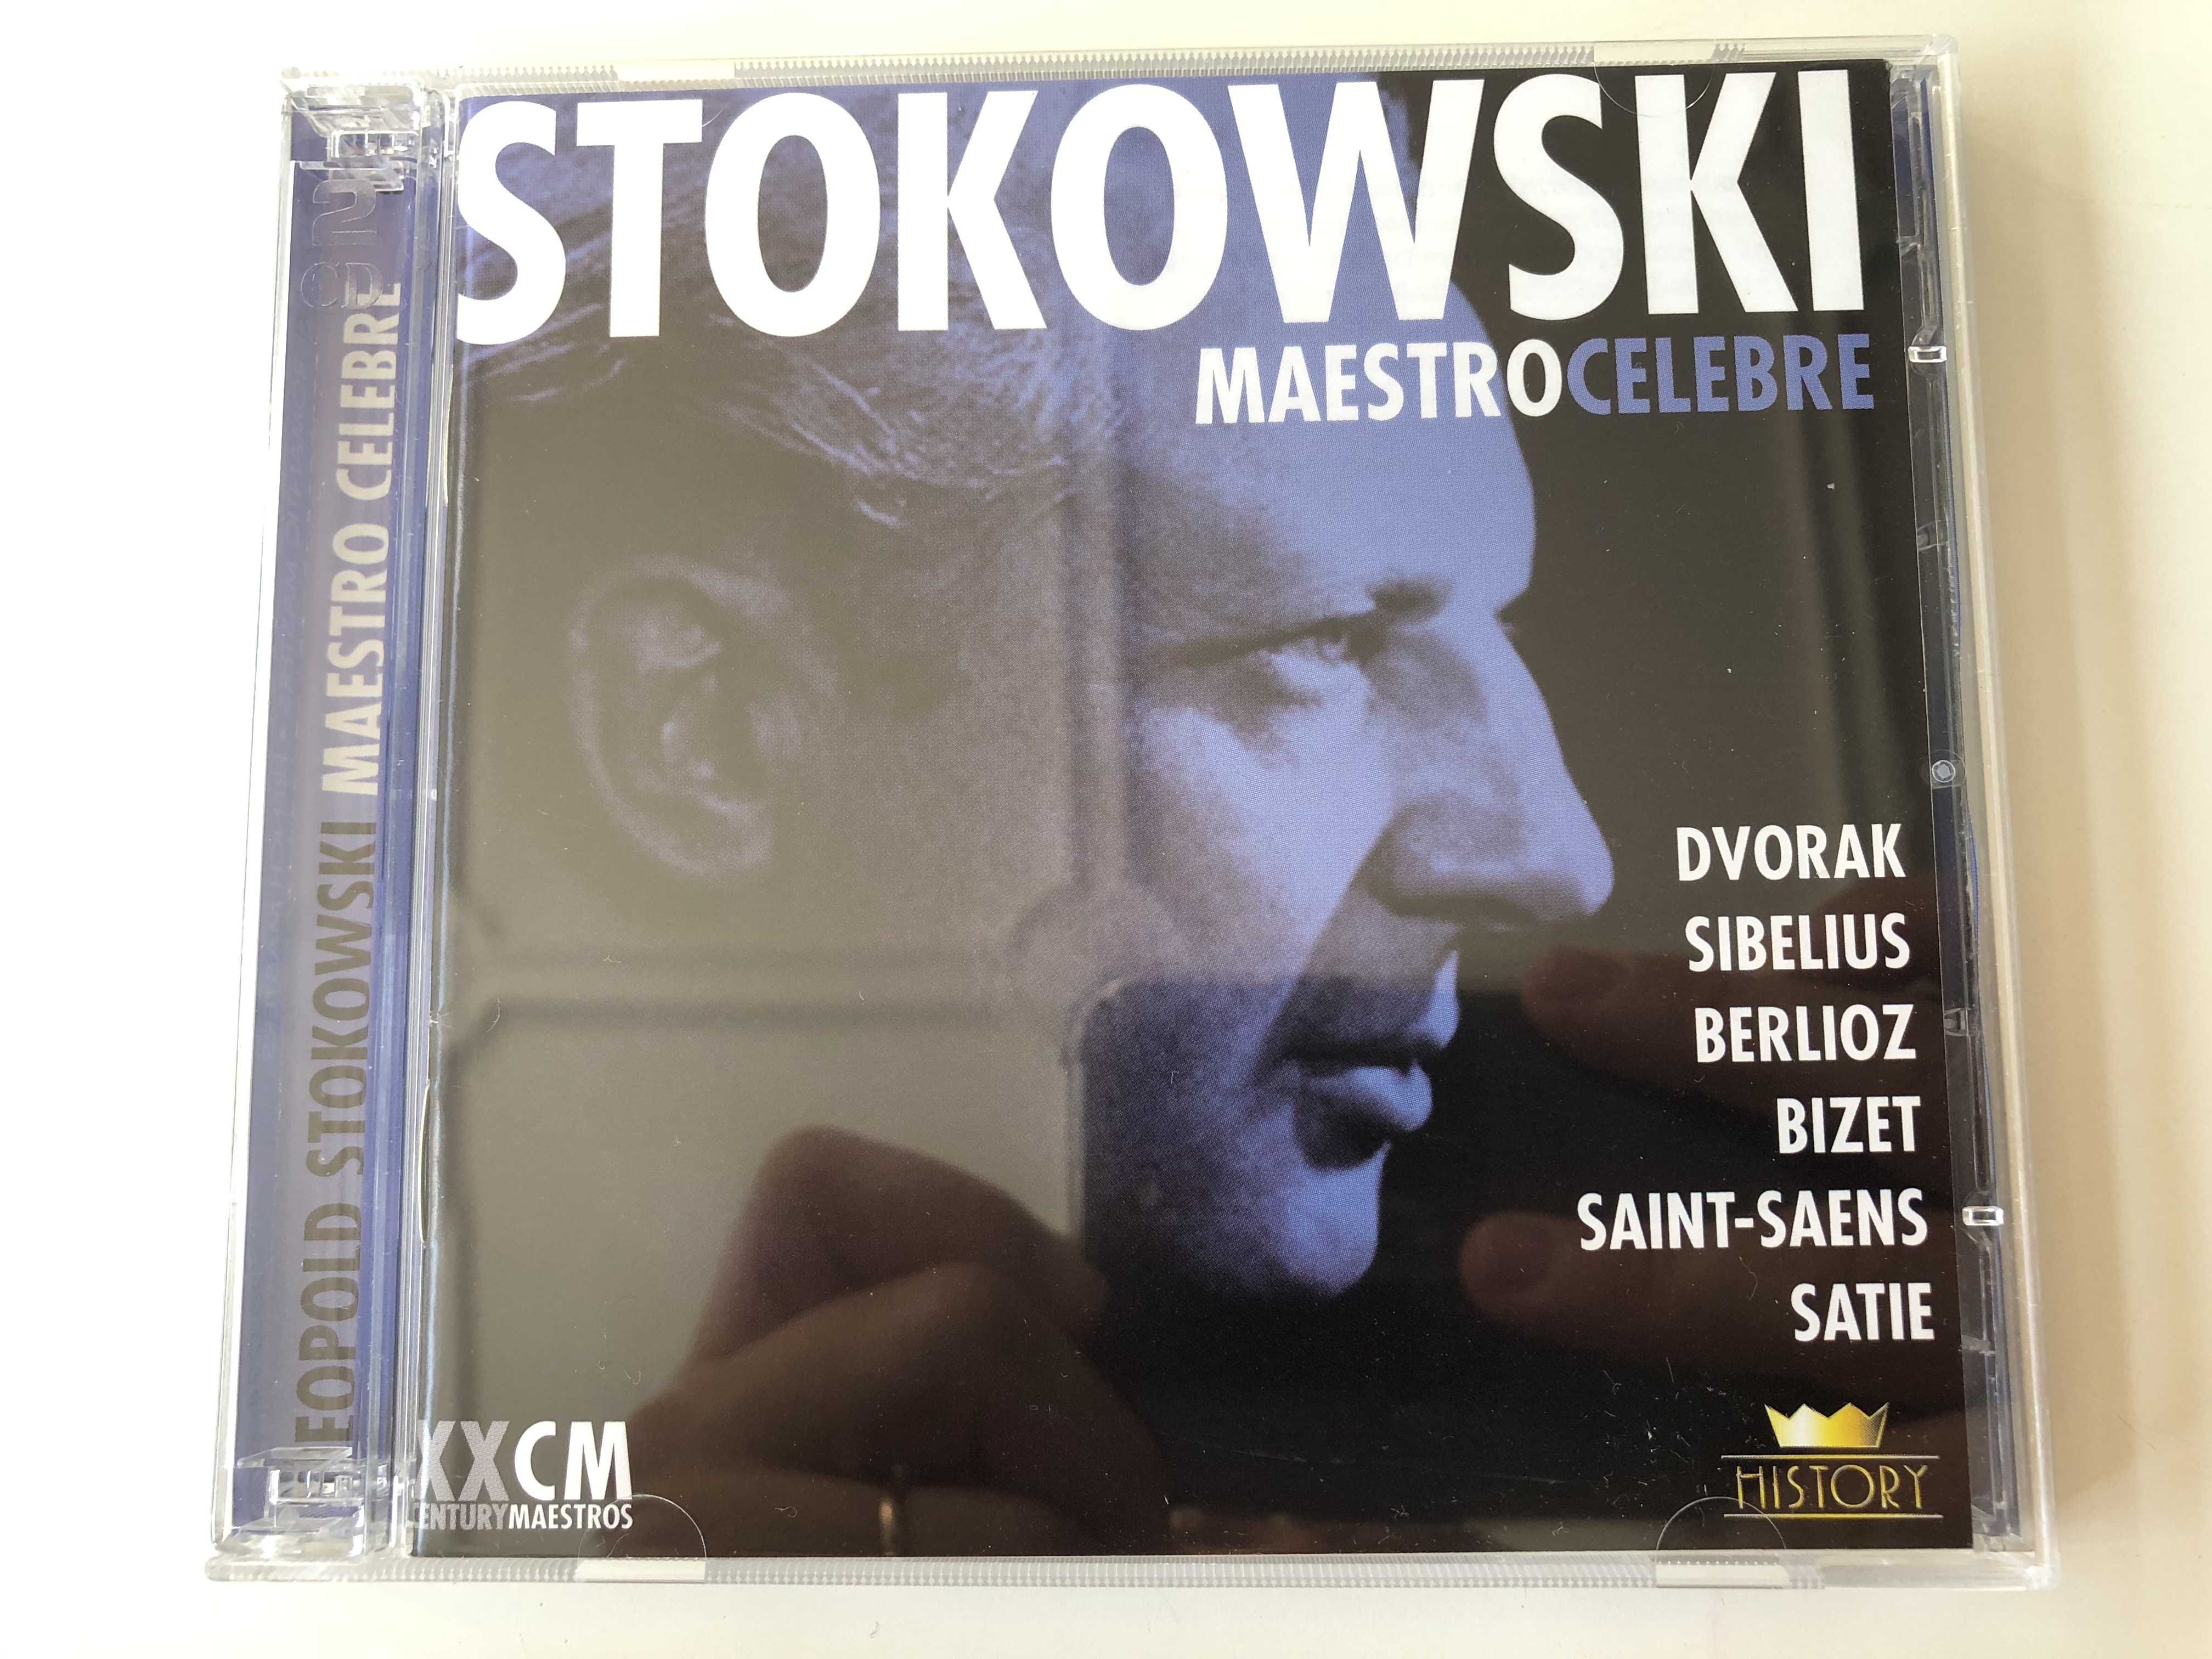 stokowski-maestro-celebre-dvorak-sibelius-berlioz-bizet-saint-saens-saite-history-2x-audio-cd-2001-203294-303-1-.jpg